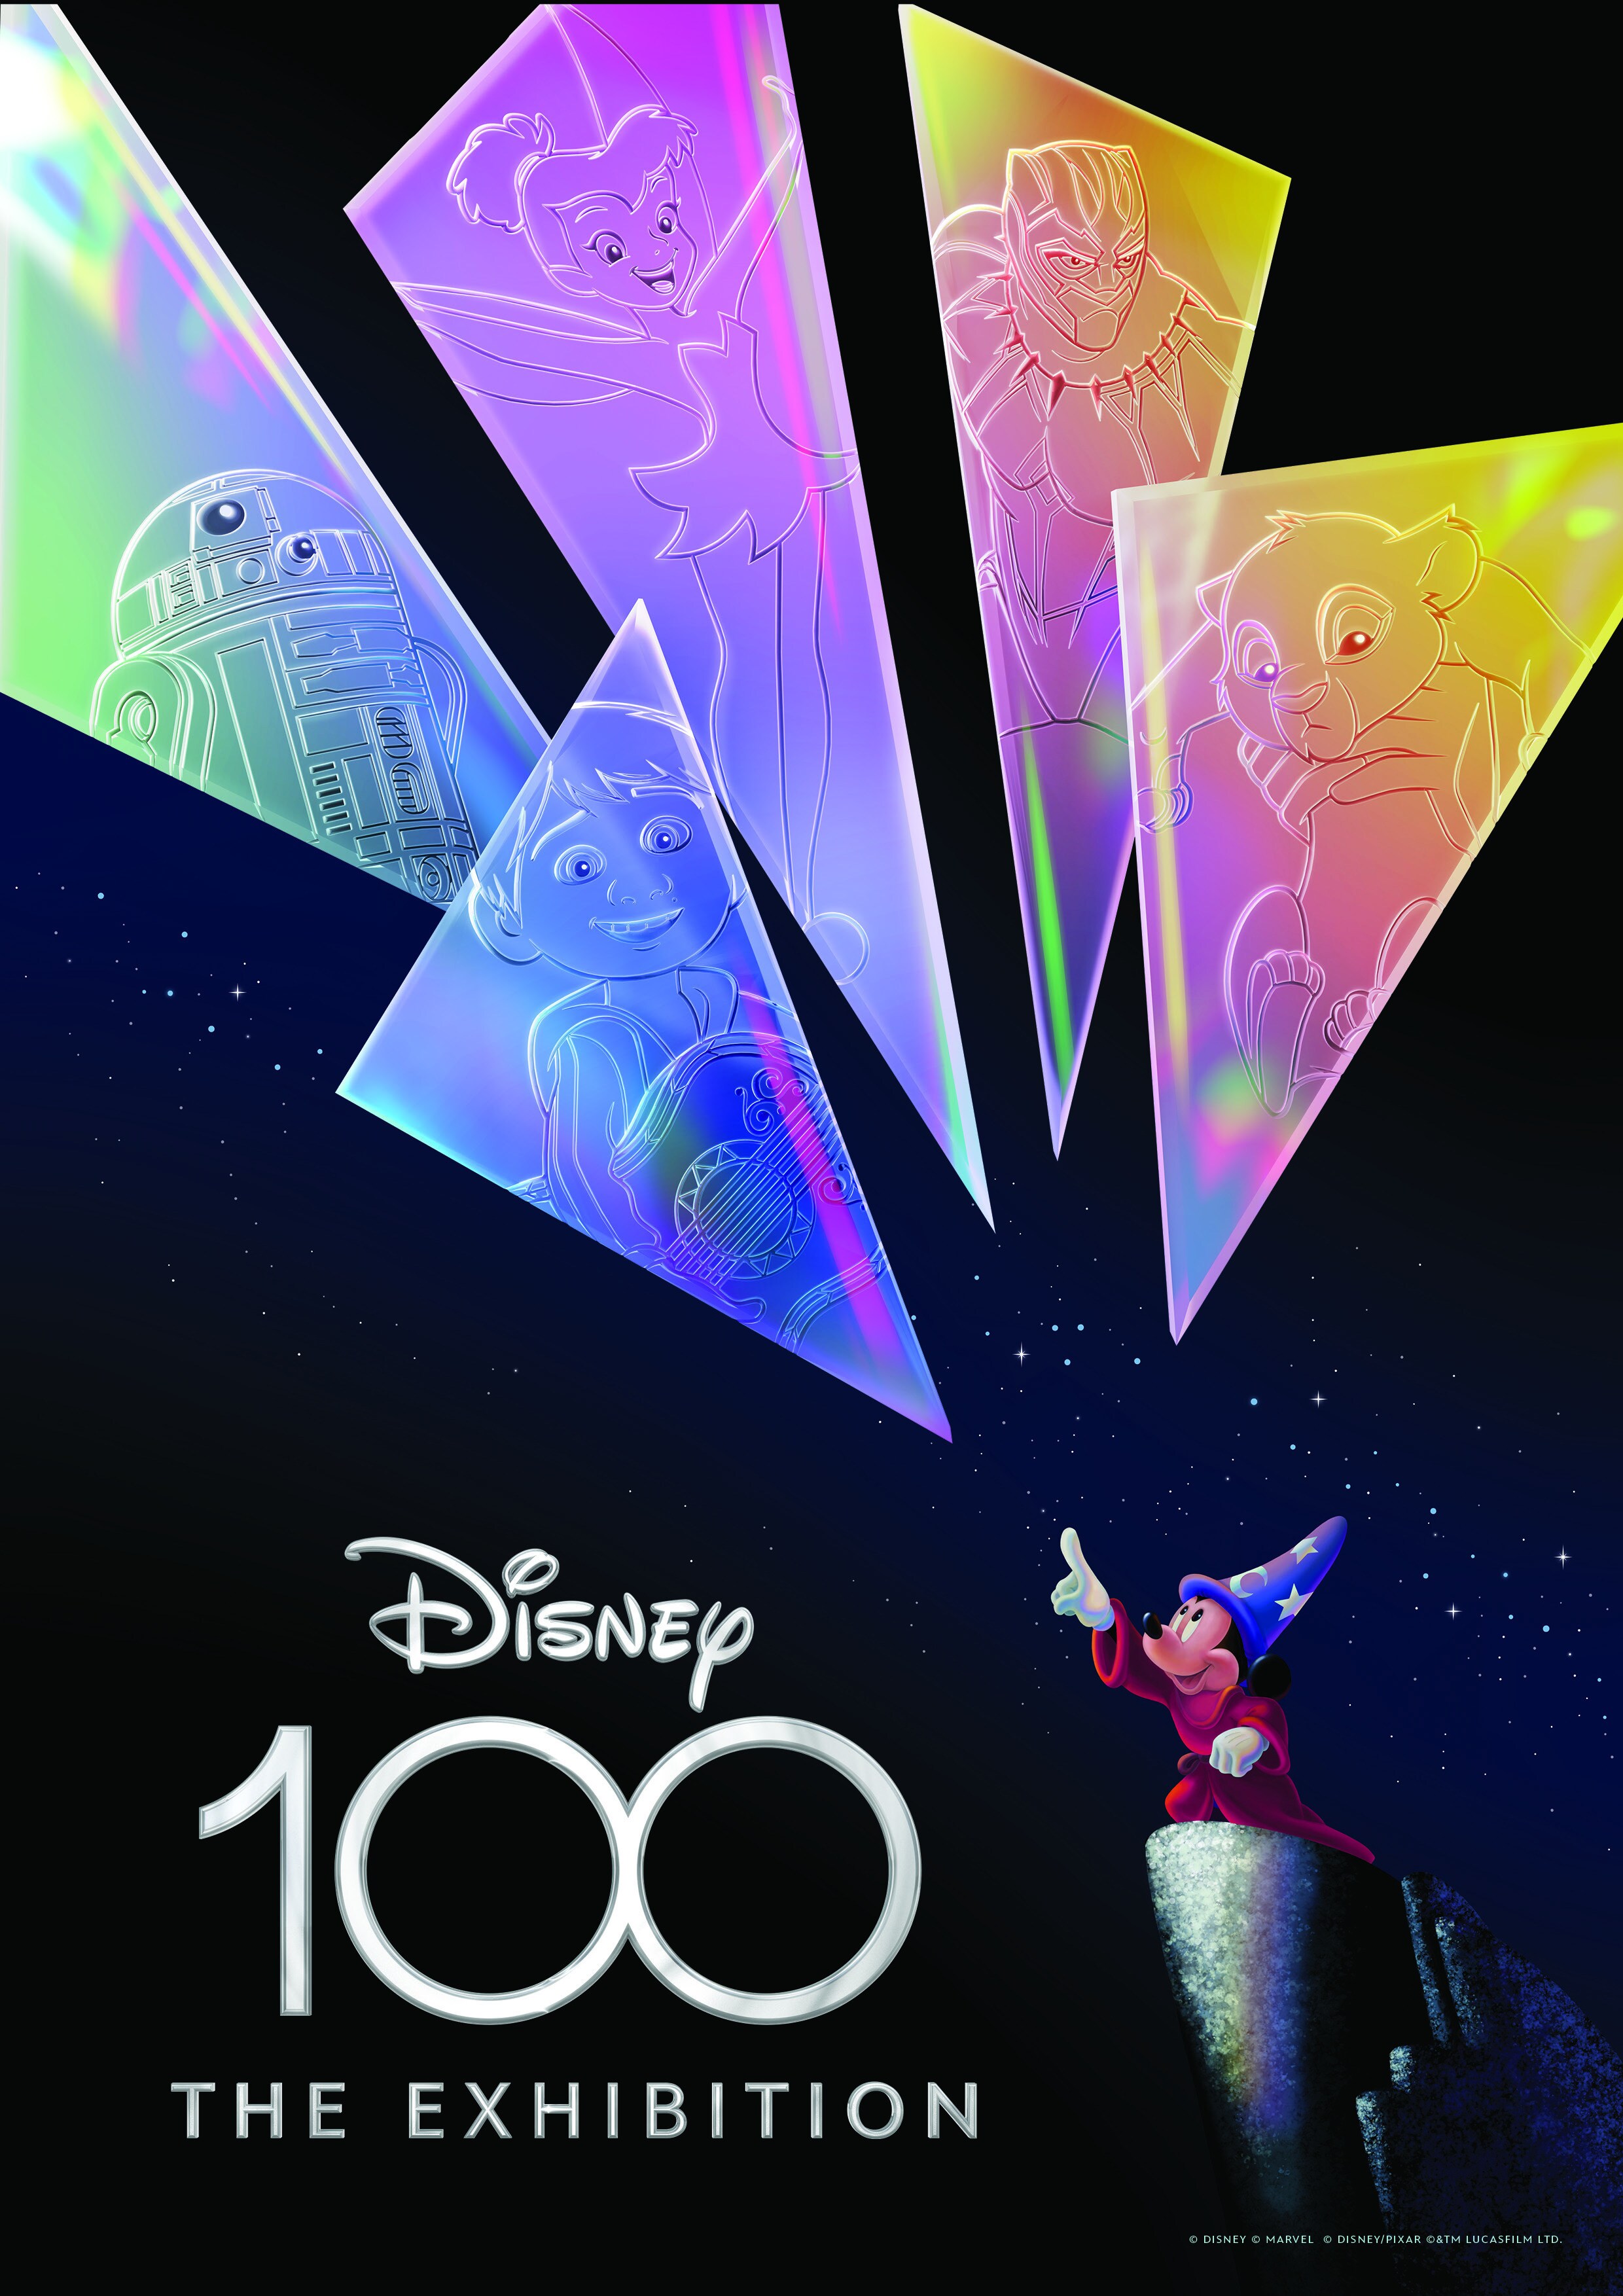 Disney100: The Exhibition Poster